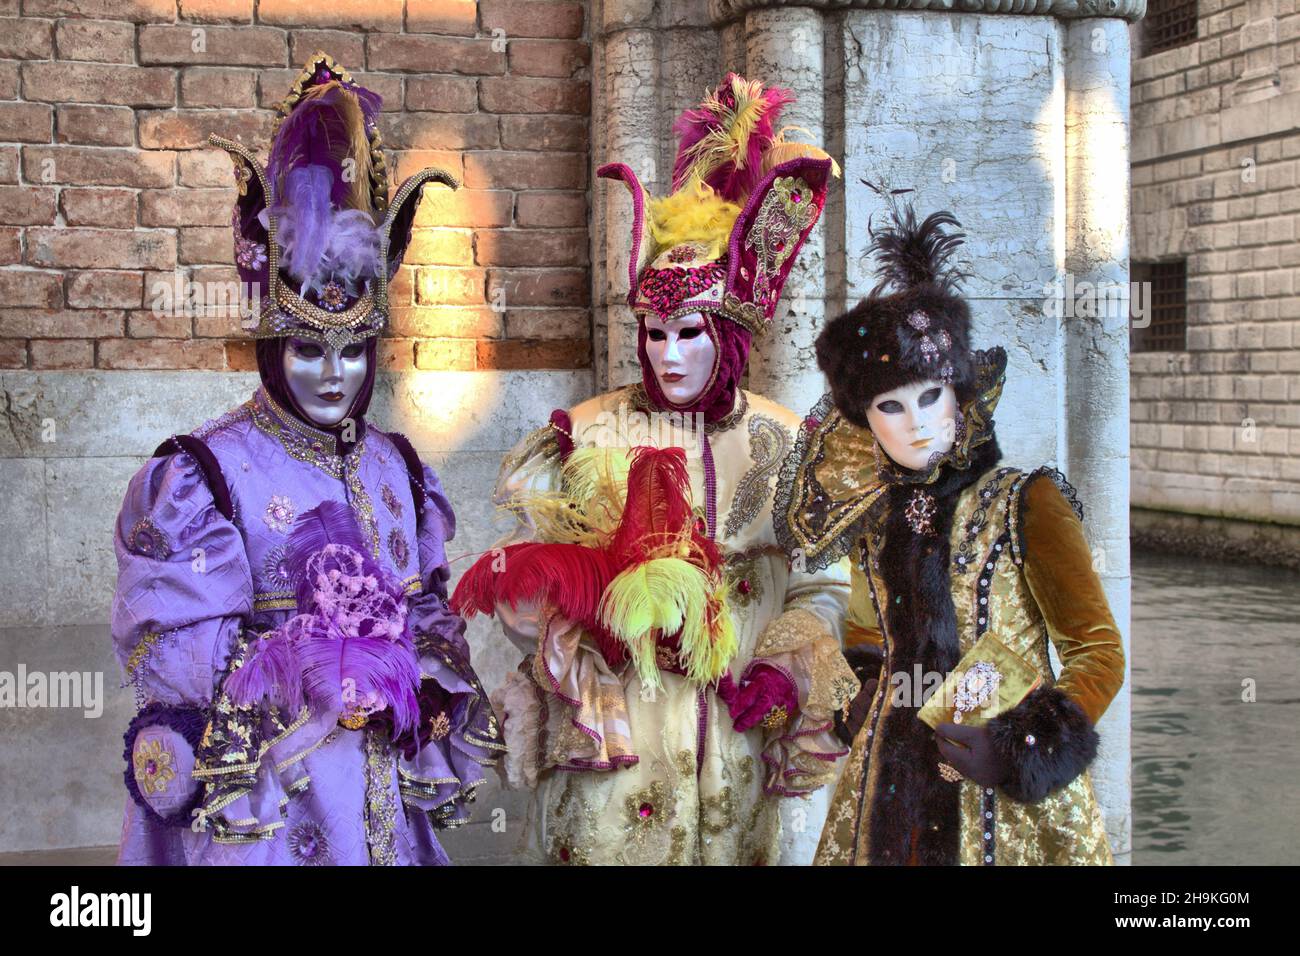 Venedig, Italien - 10. Februar 2018: Drei Personen in venezianischem Kostüm nehmen am Karneval von Venedig, Italien, Teil Stockfoto